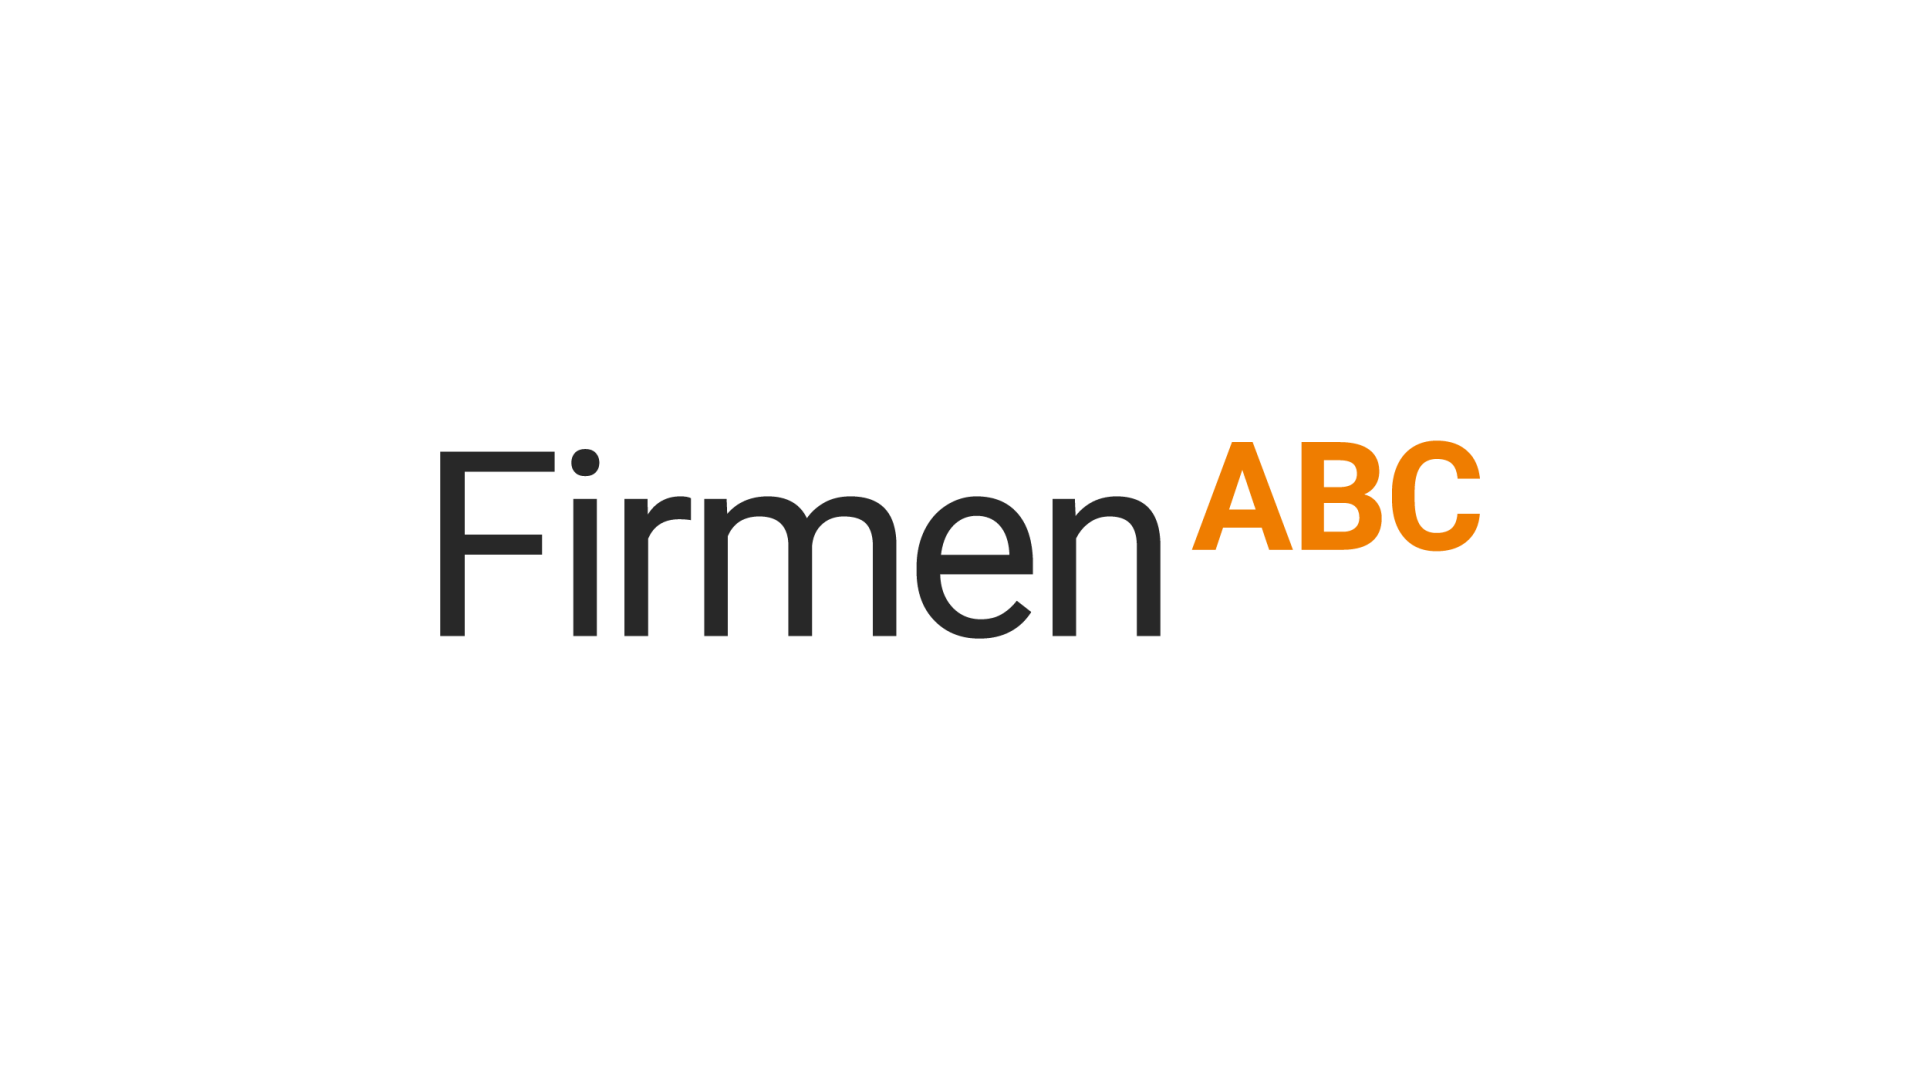 Filmreportage zu FirmenABC Marketing GmbH